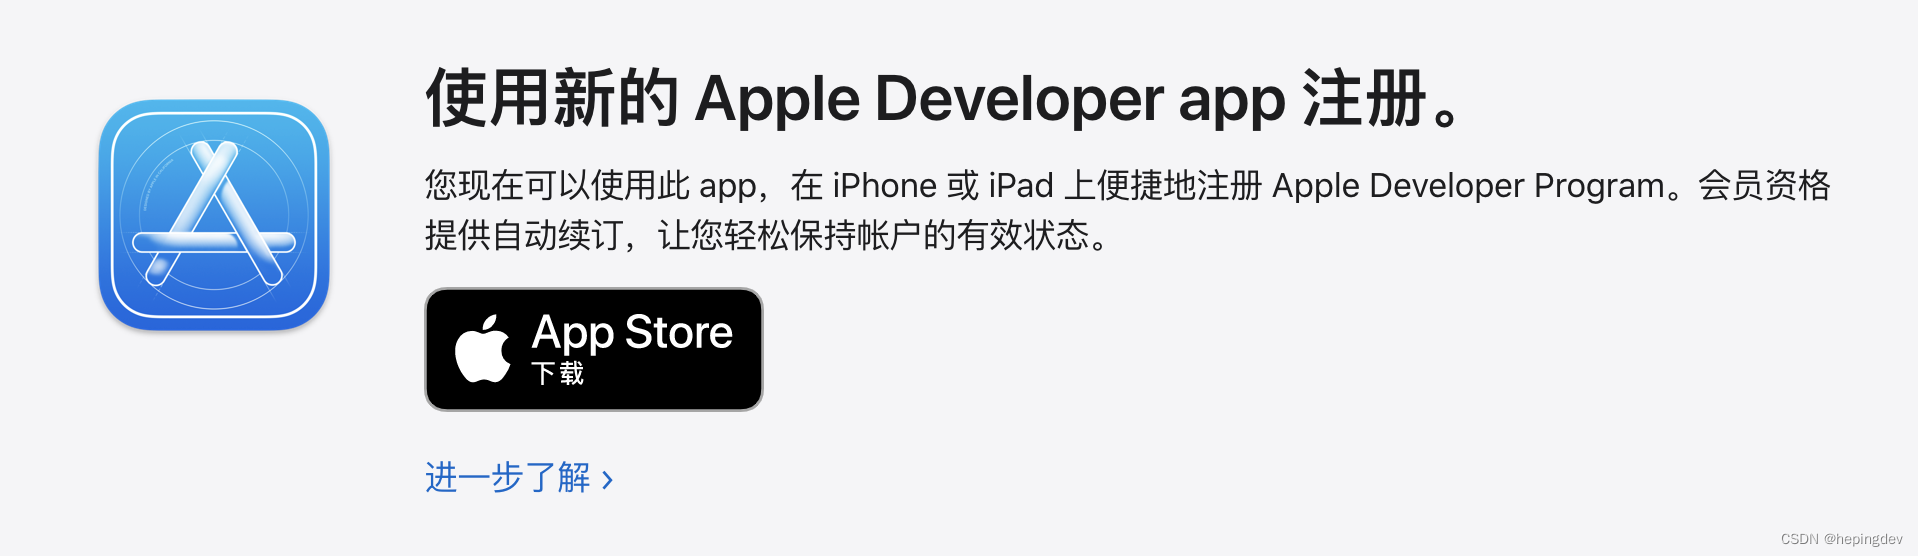 iOS苹果开发者账号(公司账号)申请流程详解